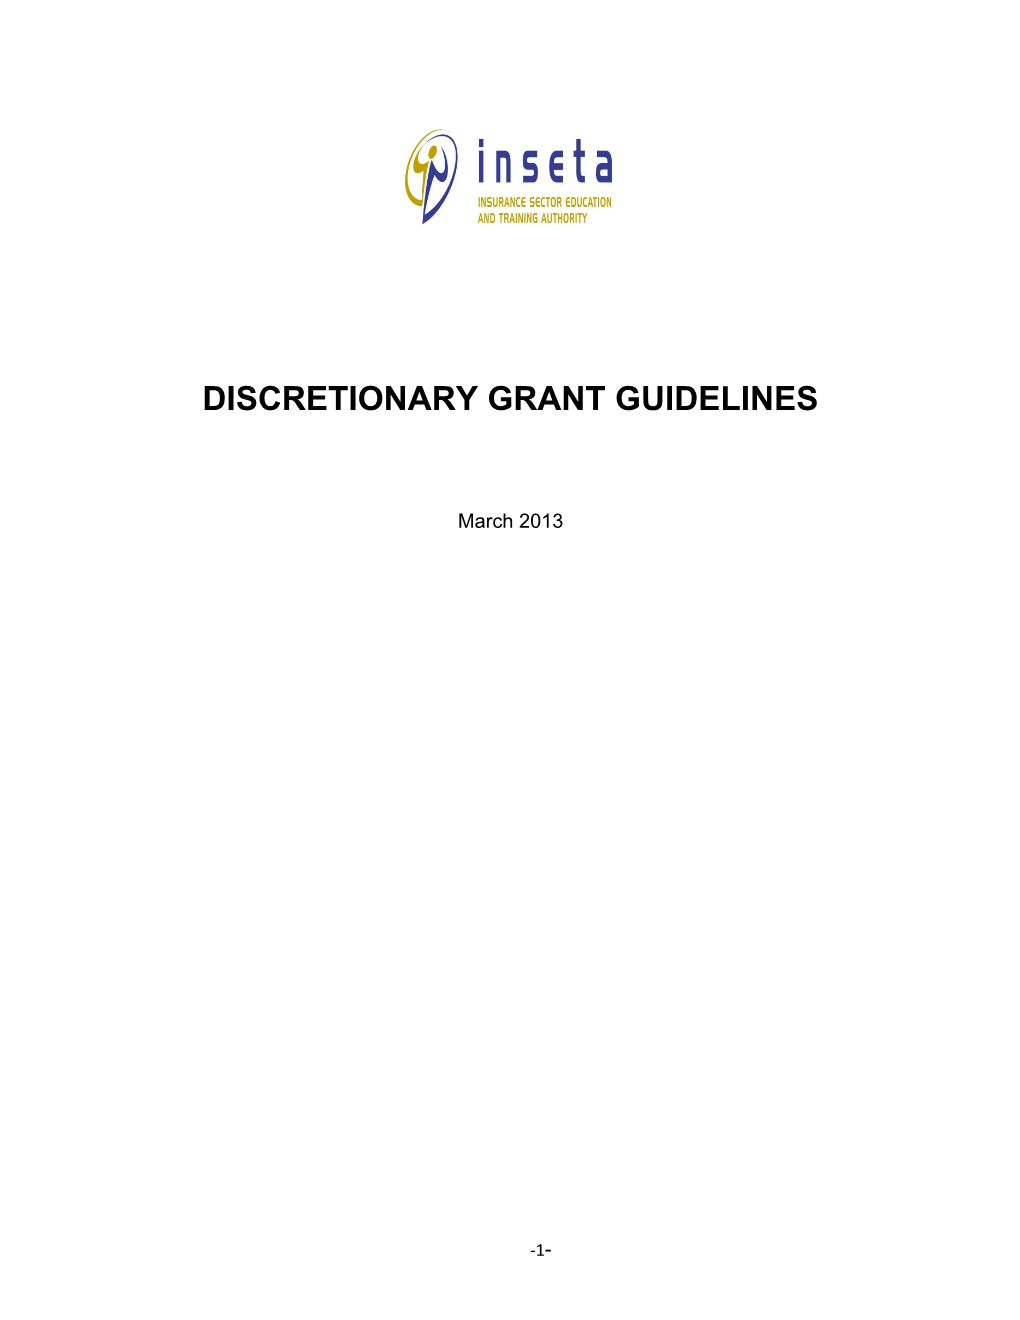 Discretionary Grant Guidelines